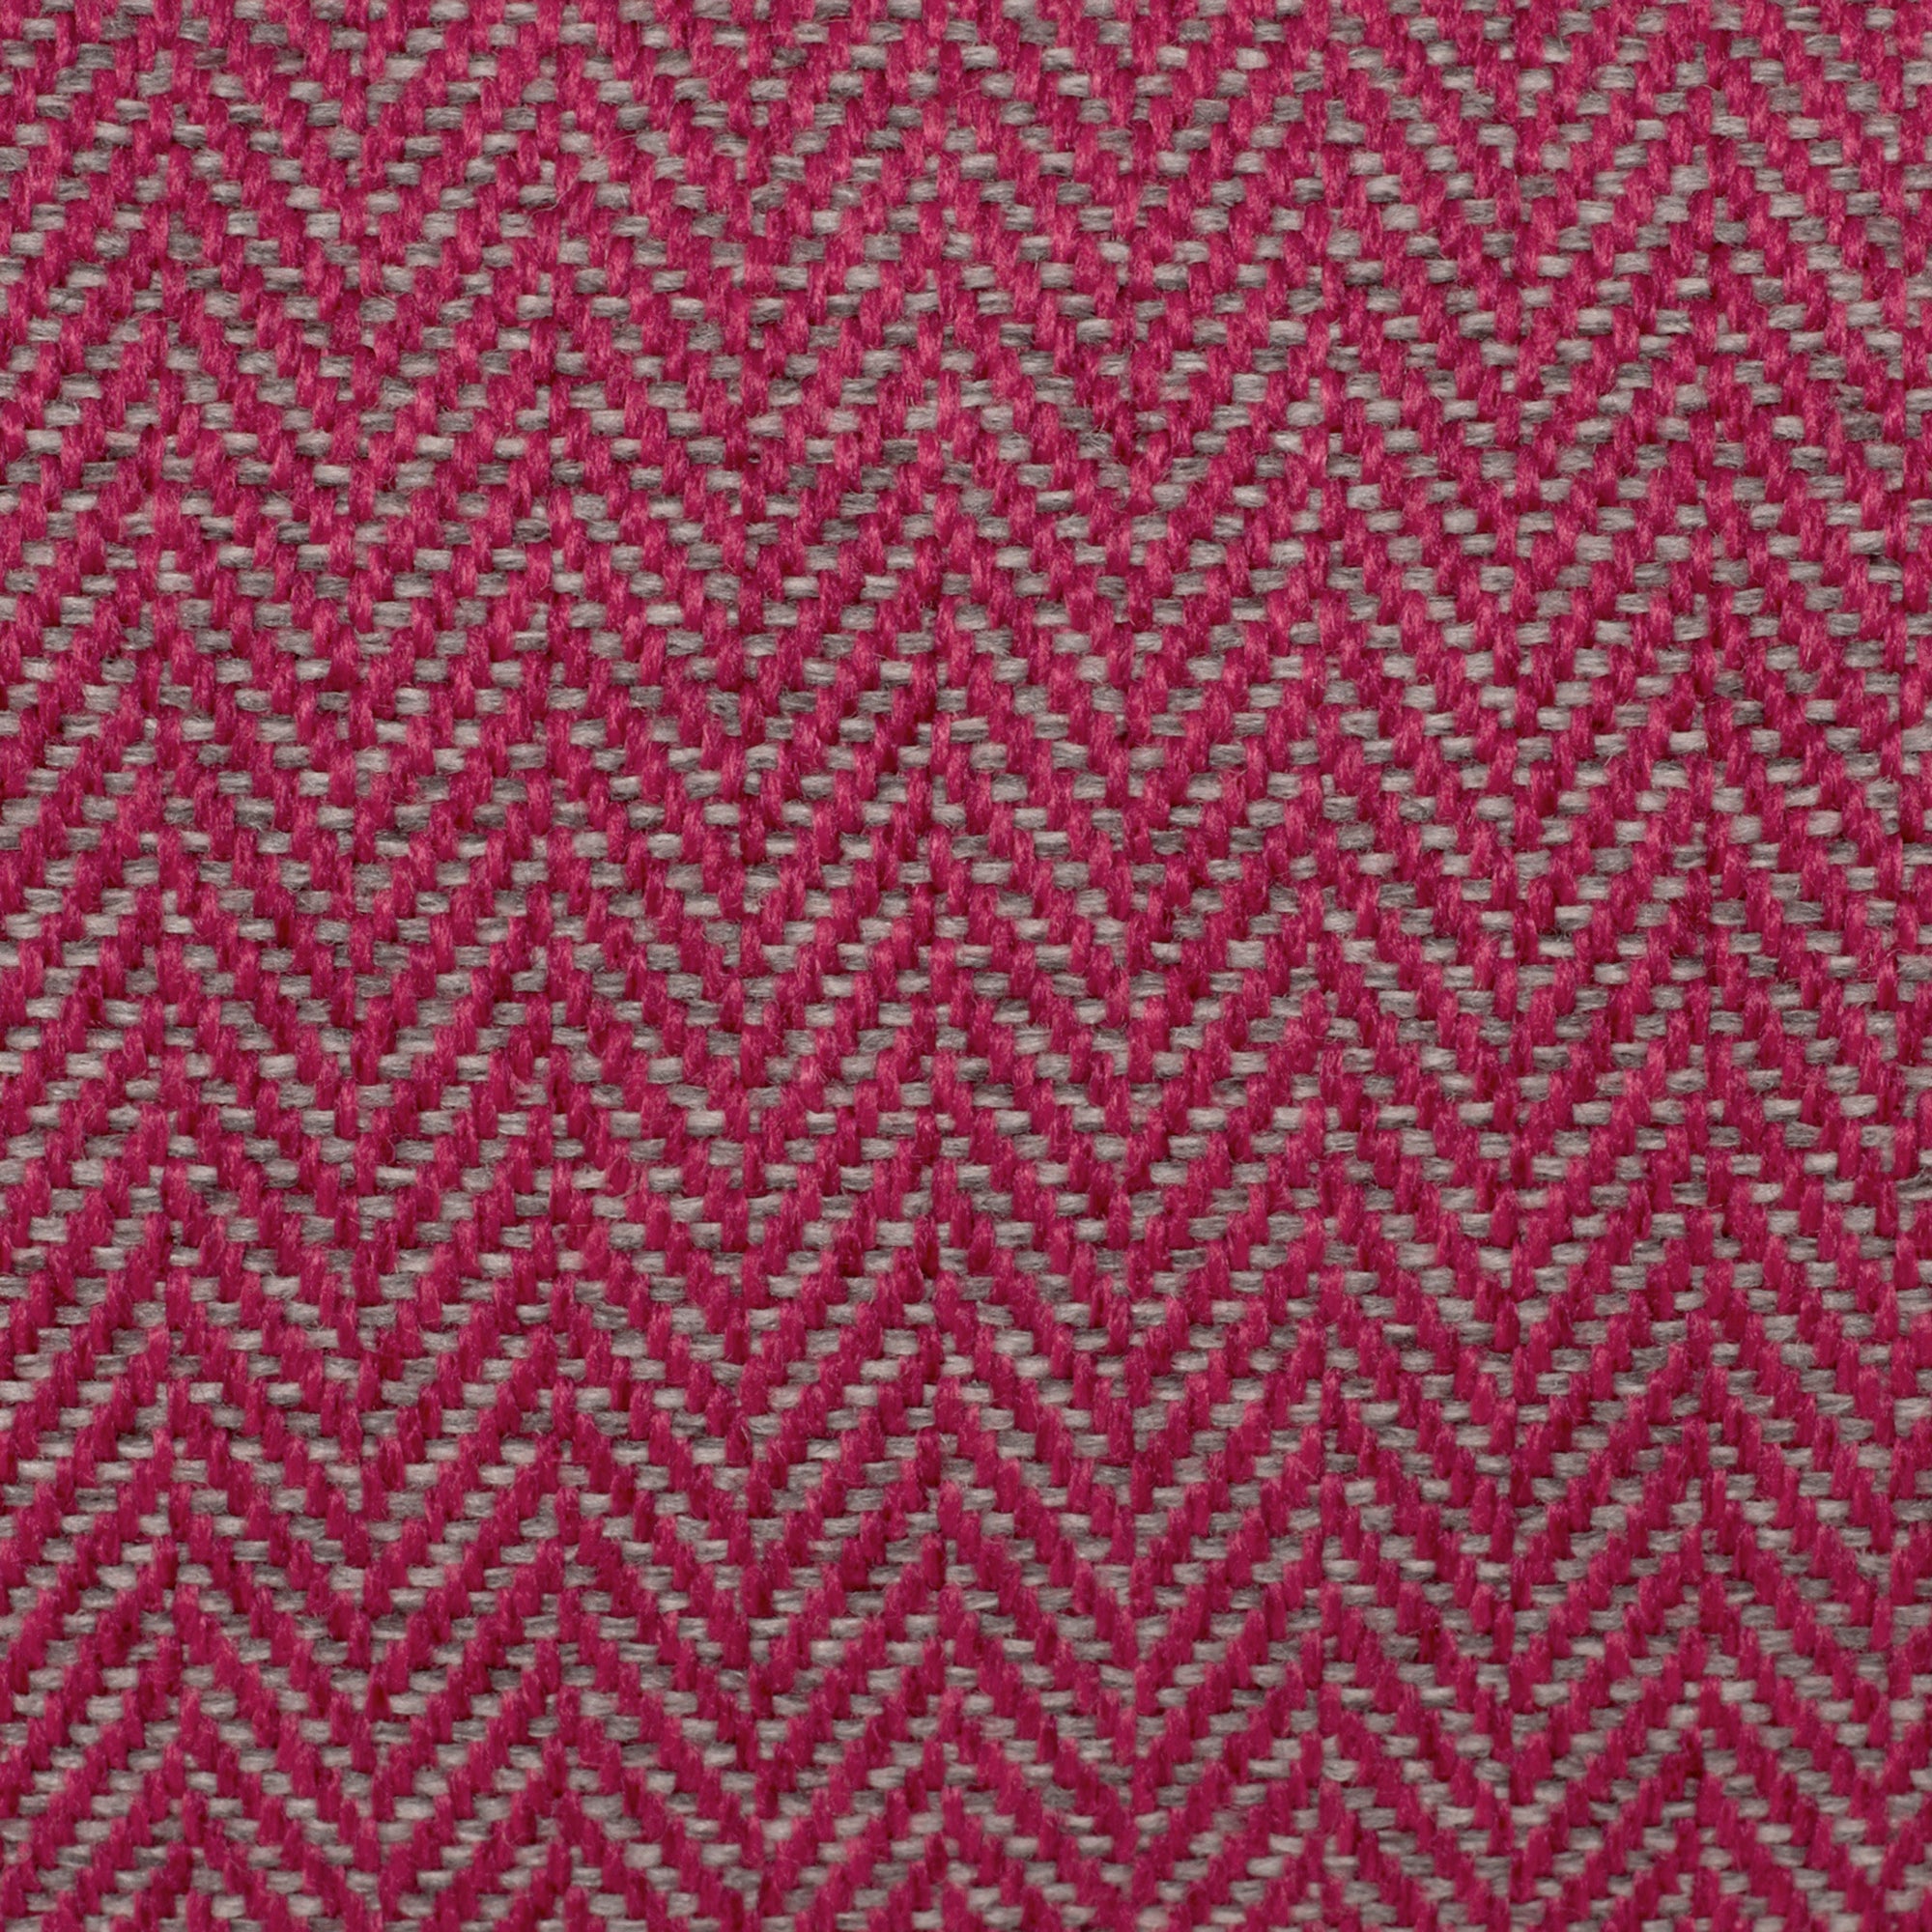  KONA CAVE® luxury dog bed fabrics. Pink Herringbone.